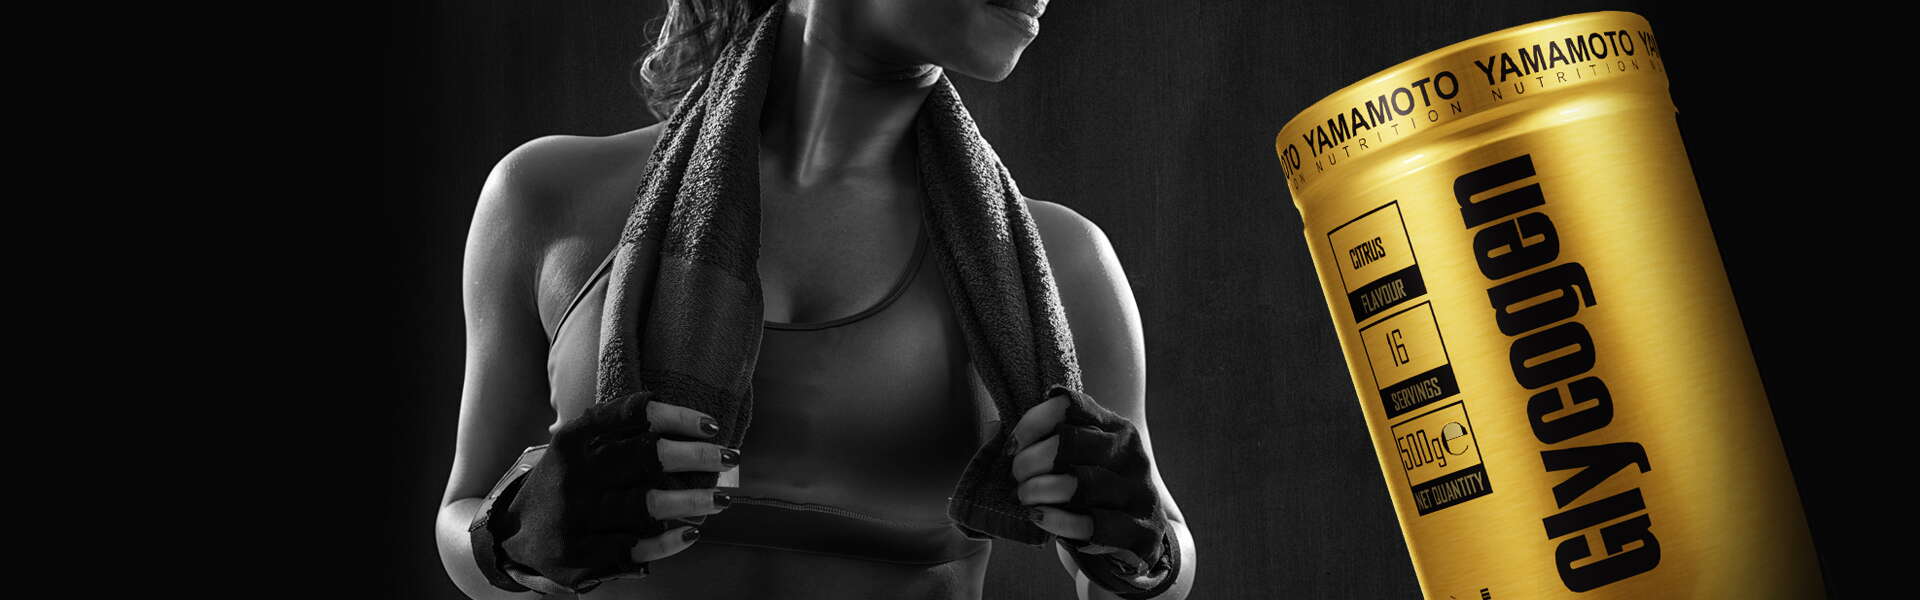 Glycogen: l'Intra-Workout ideale